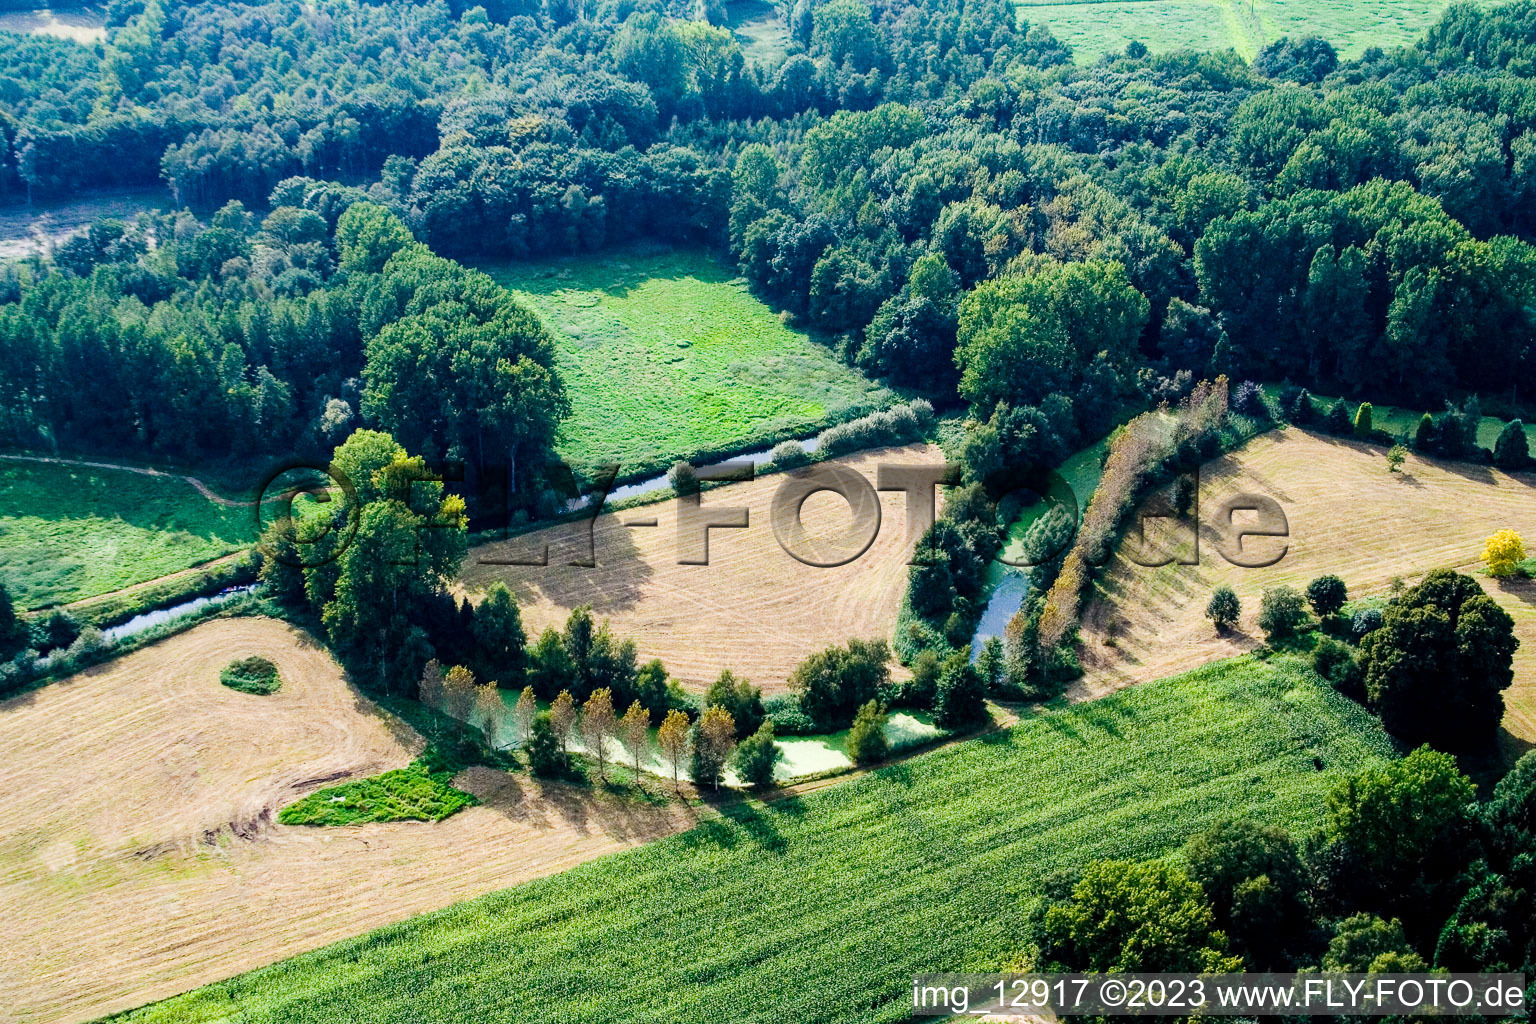 Between Kerken and Limburg in Kerken in the state North Rhine-Westphalia, Germany from a drone